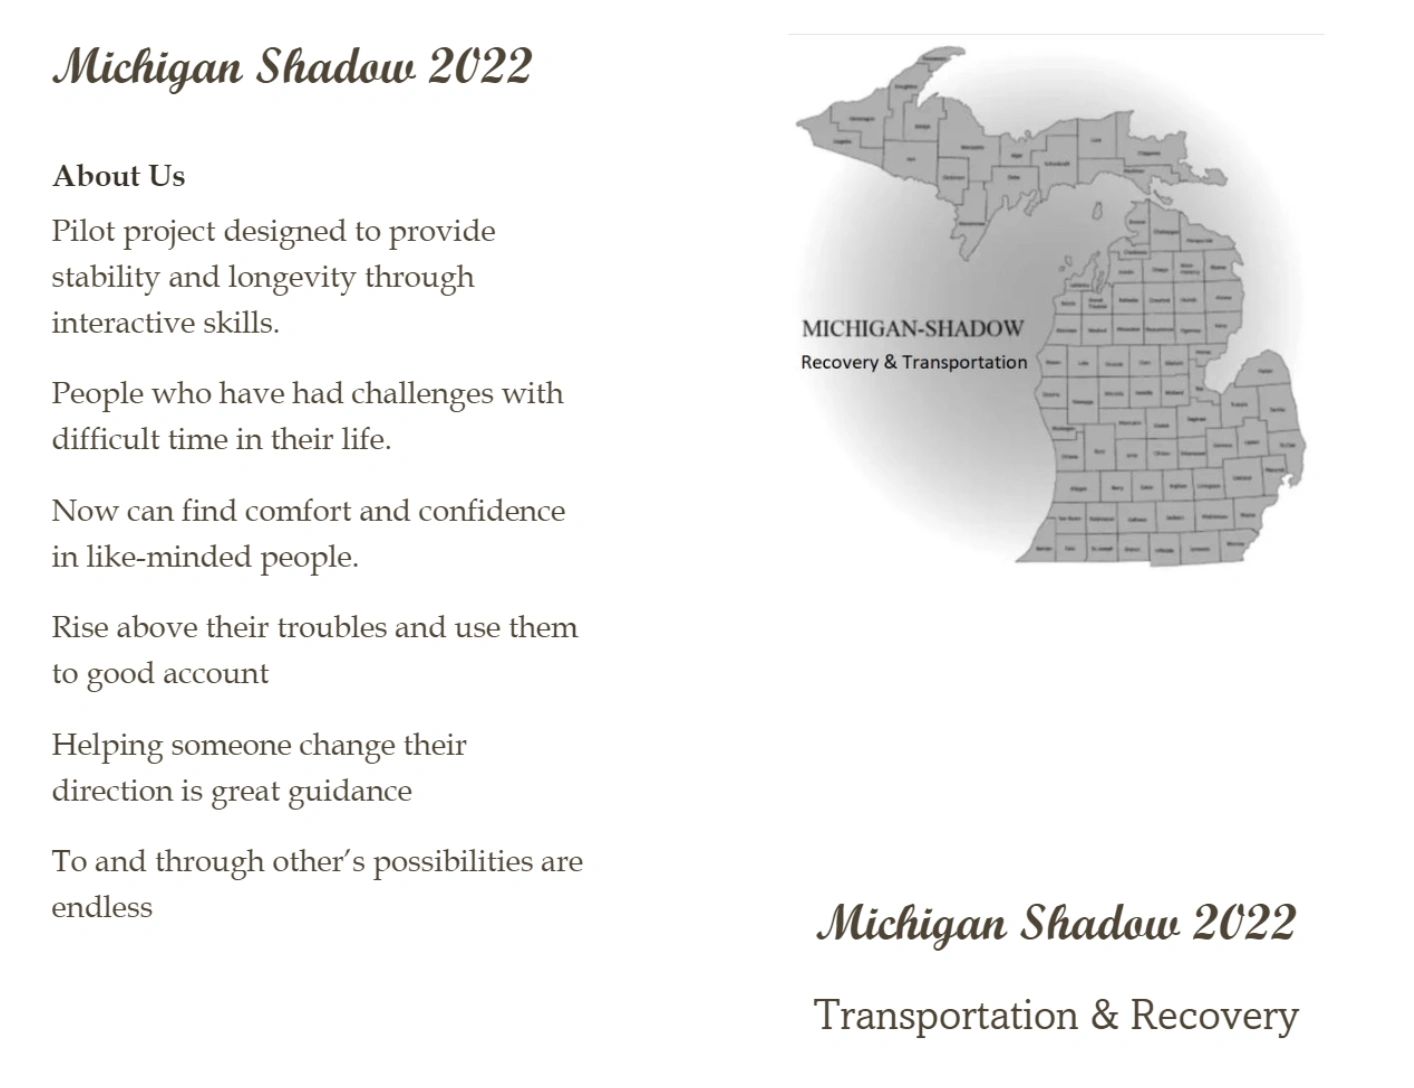 MichiganShadow